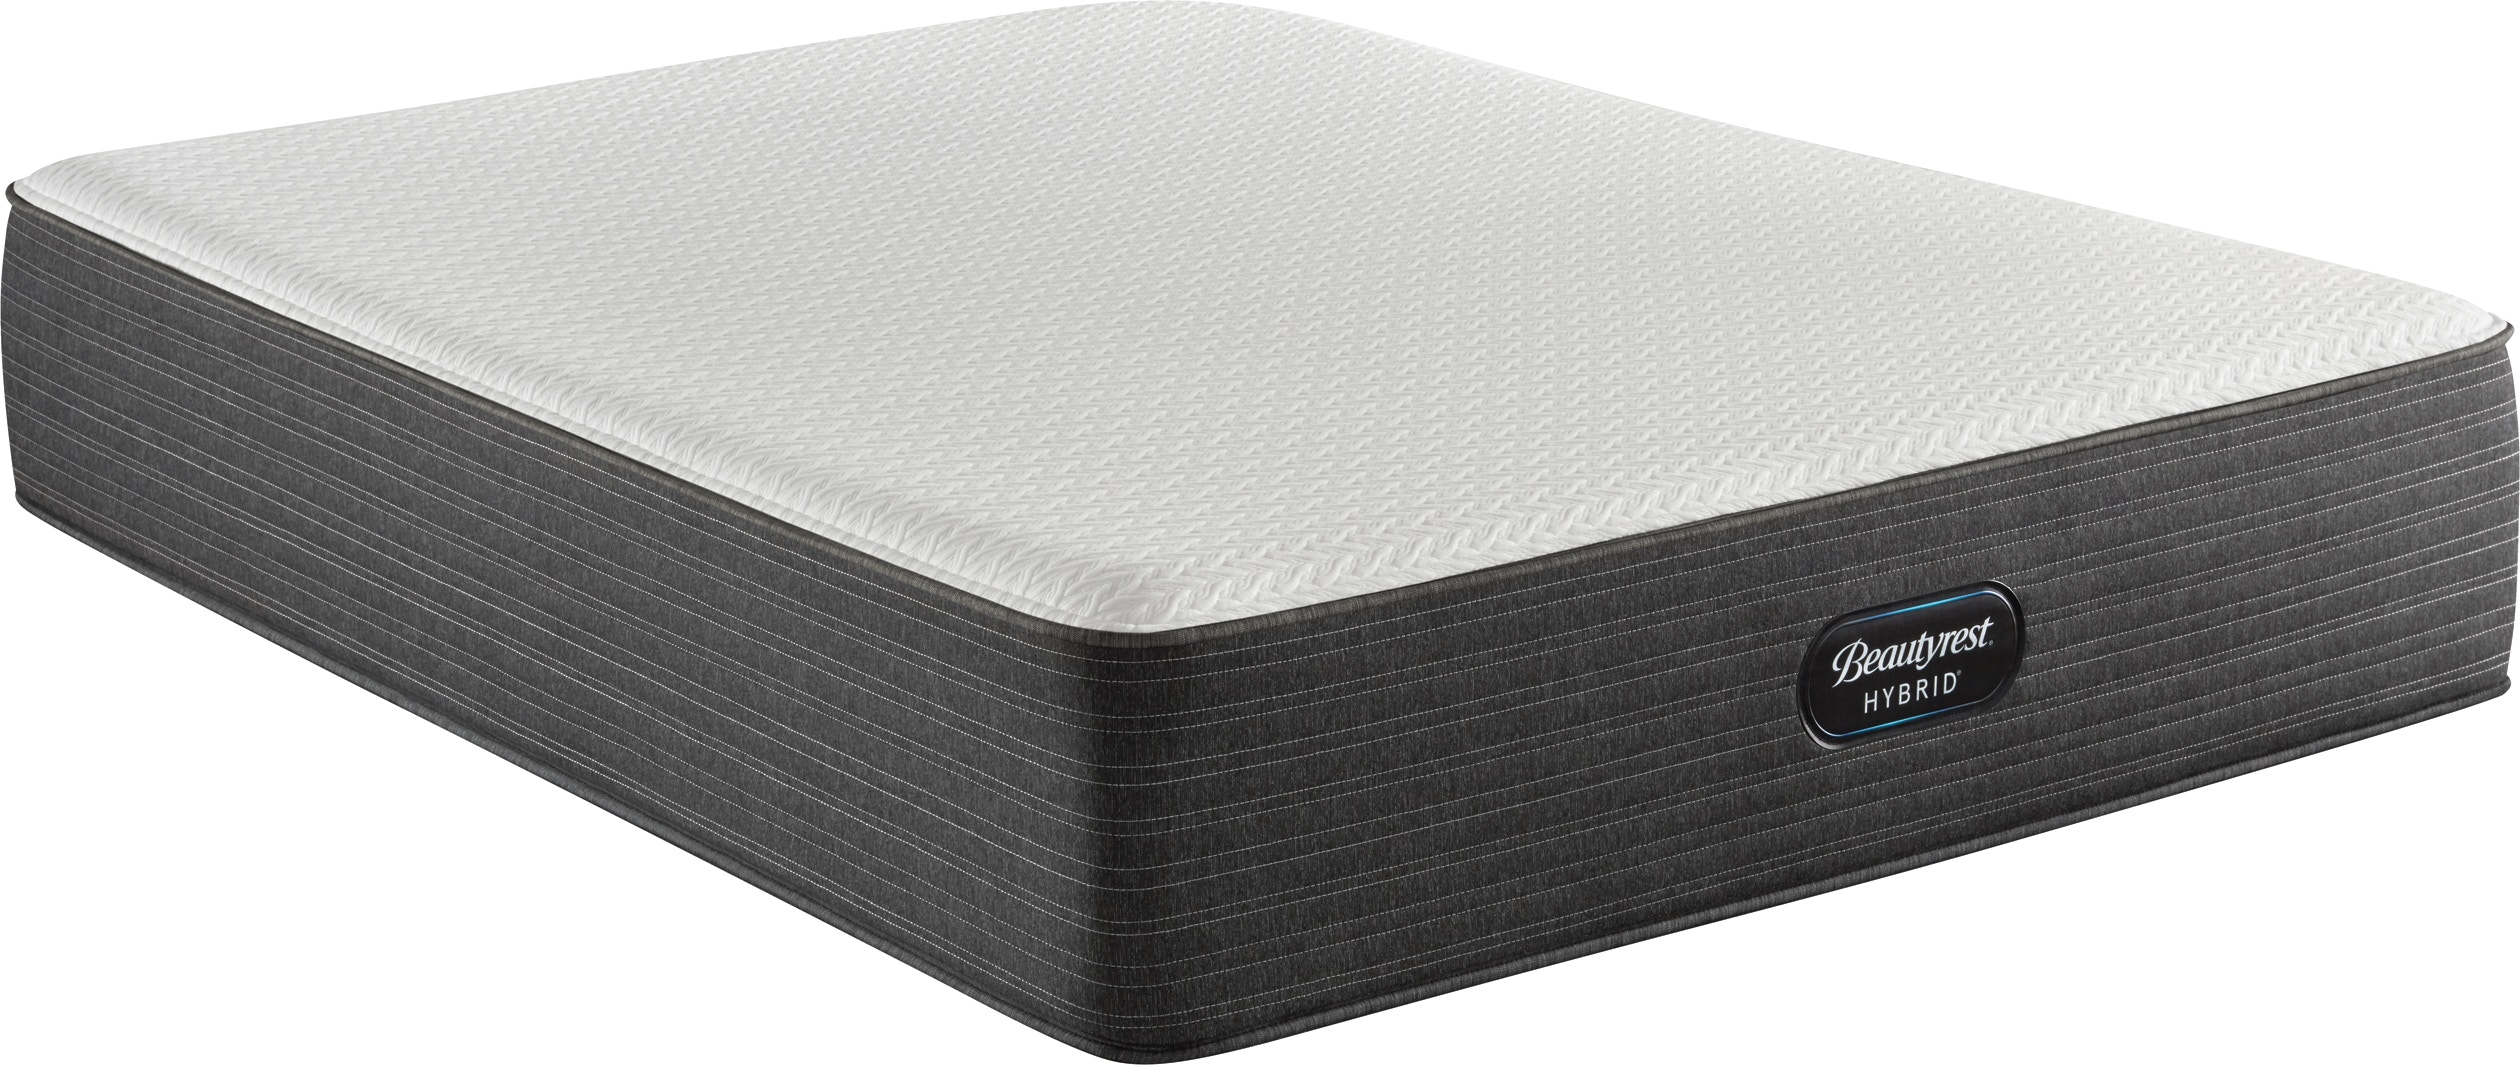 beautyrest hybrid 13.5 inch plush mattress